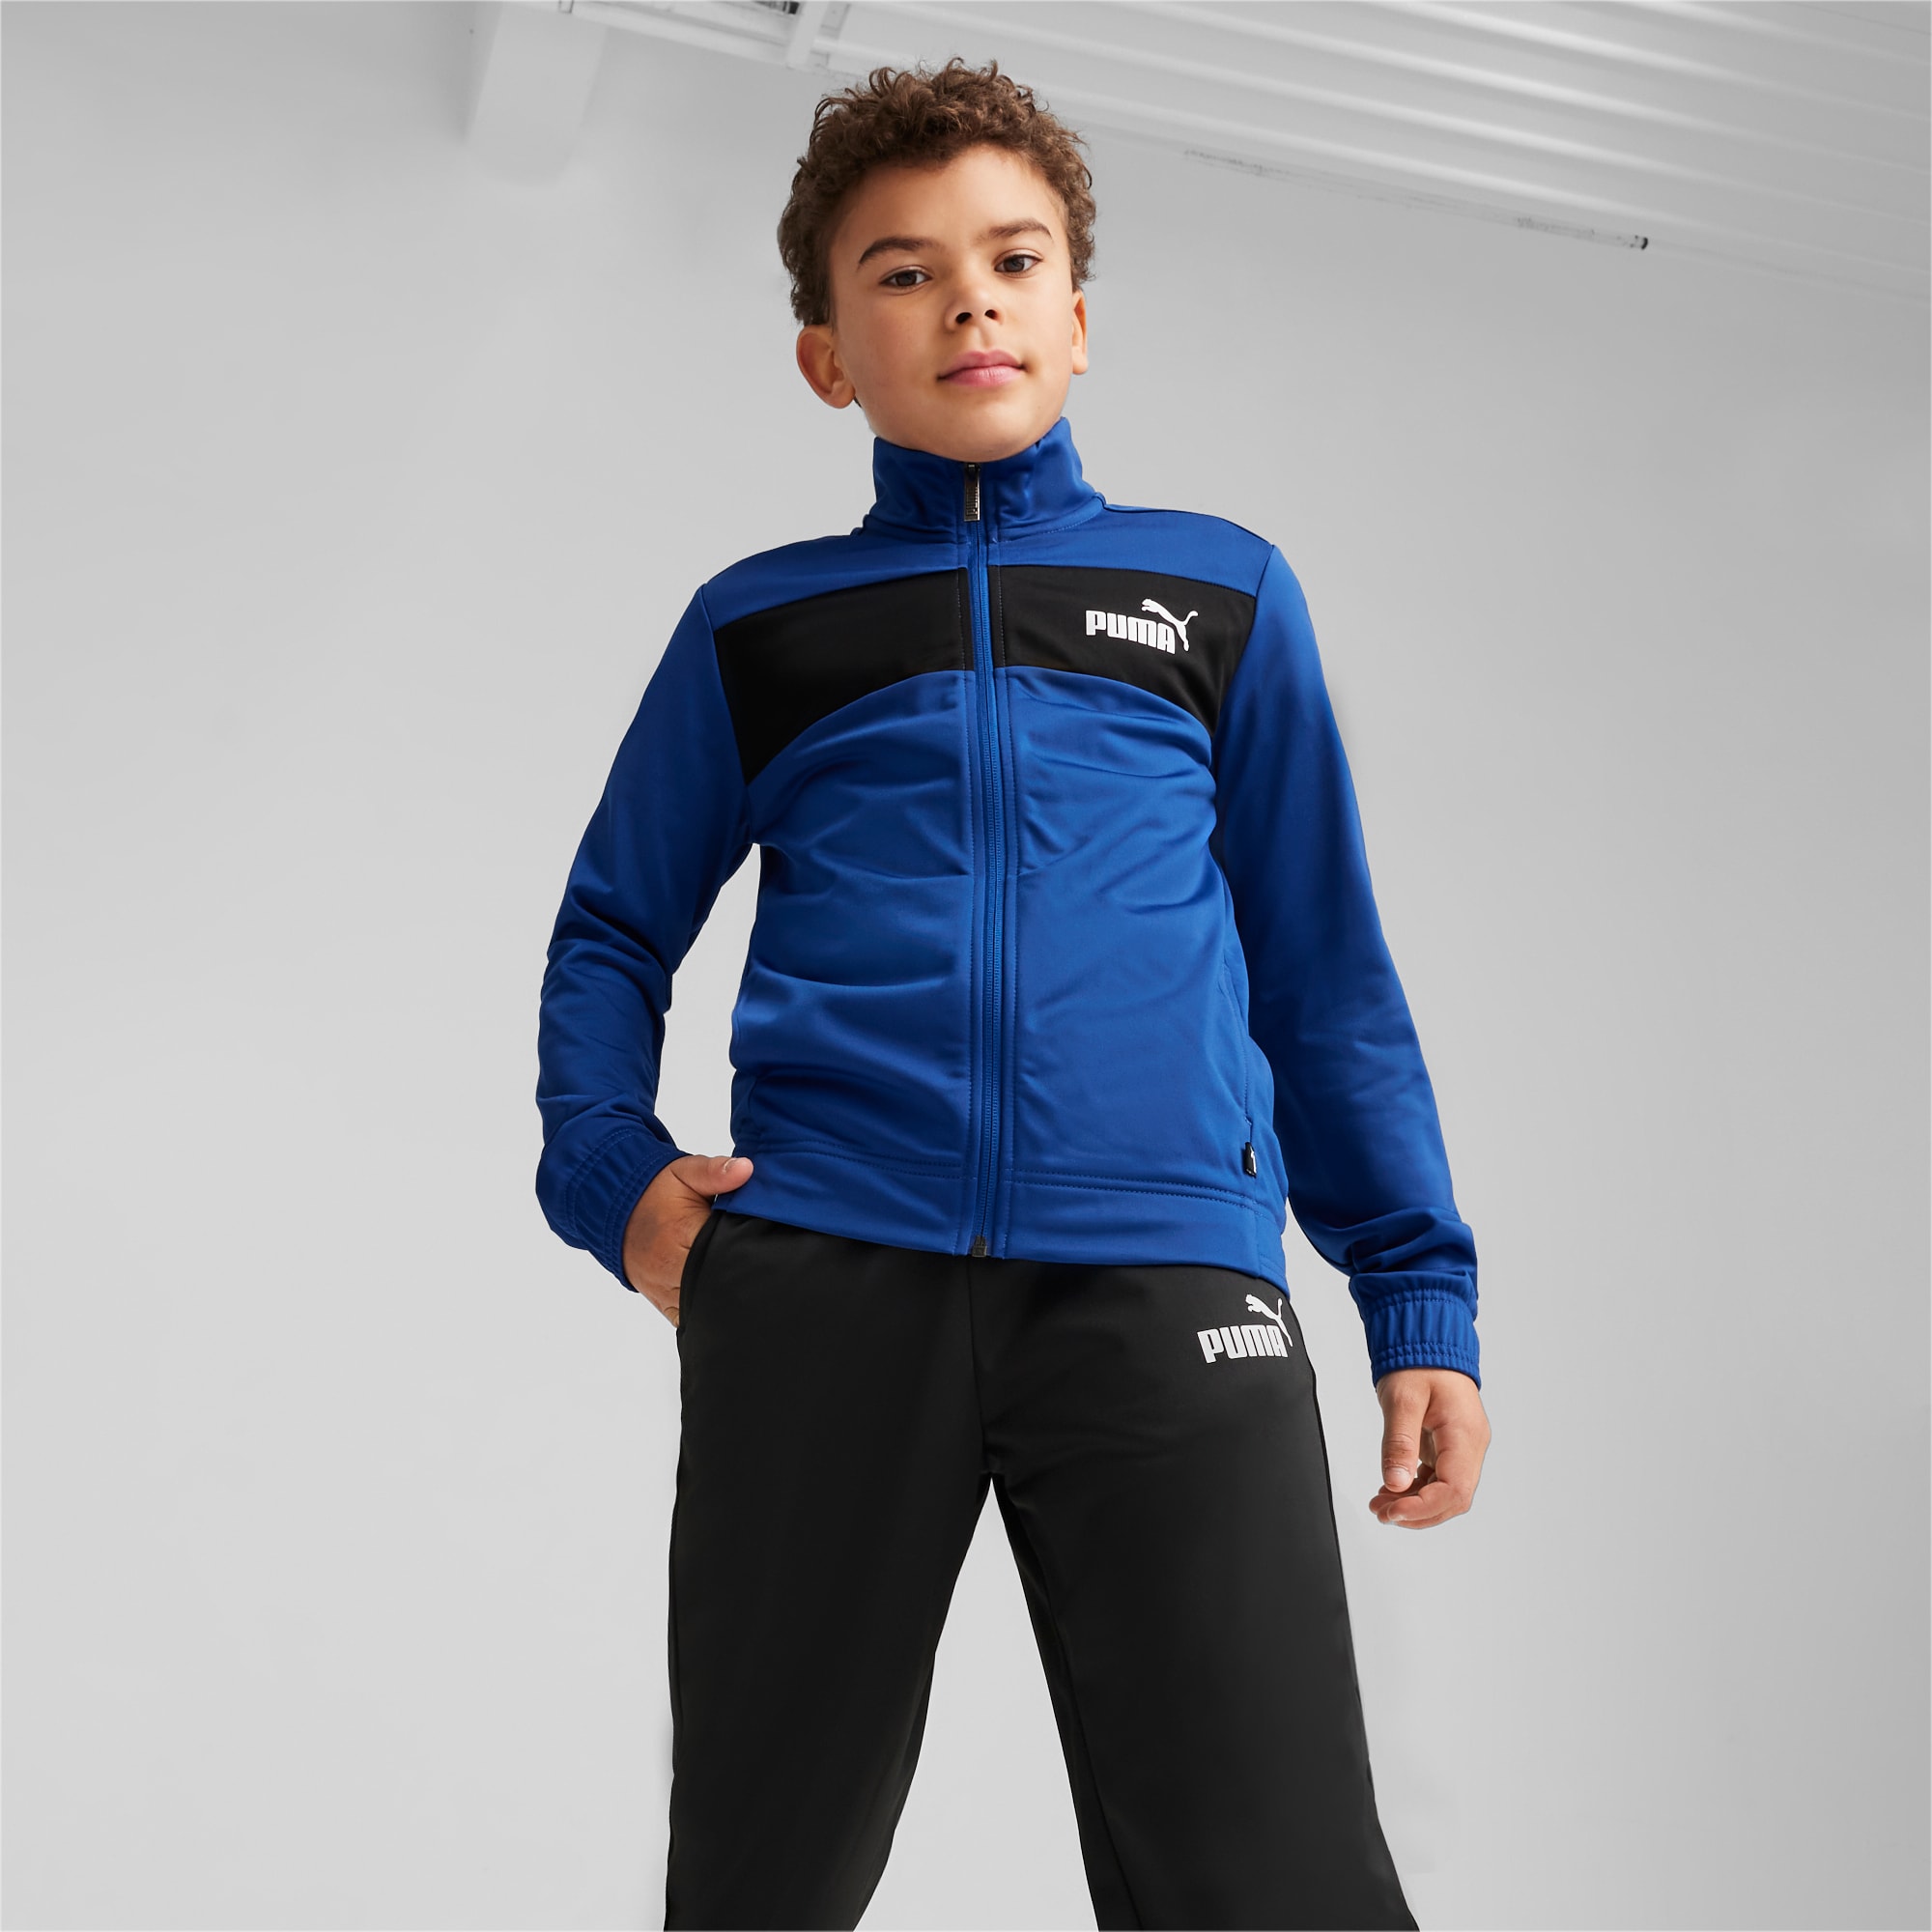 PUMA Jugend-Trainingsanzug Aus Polyester Für Kinder, Blau, Größe: 116, Kleidung